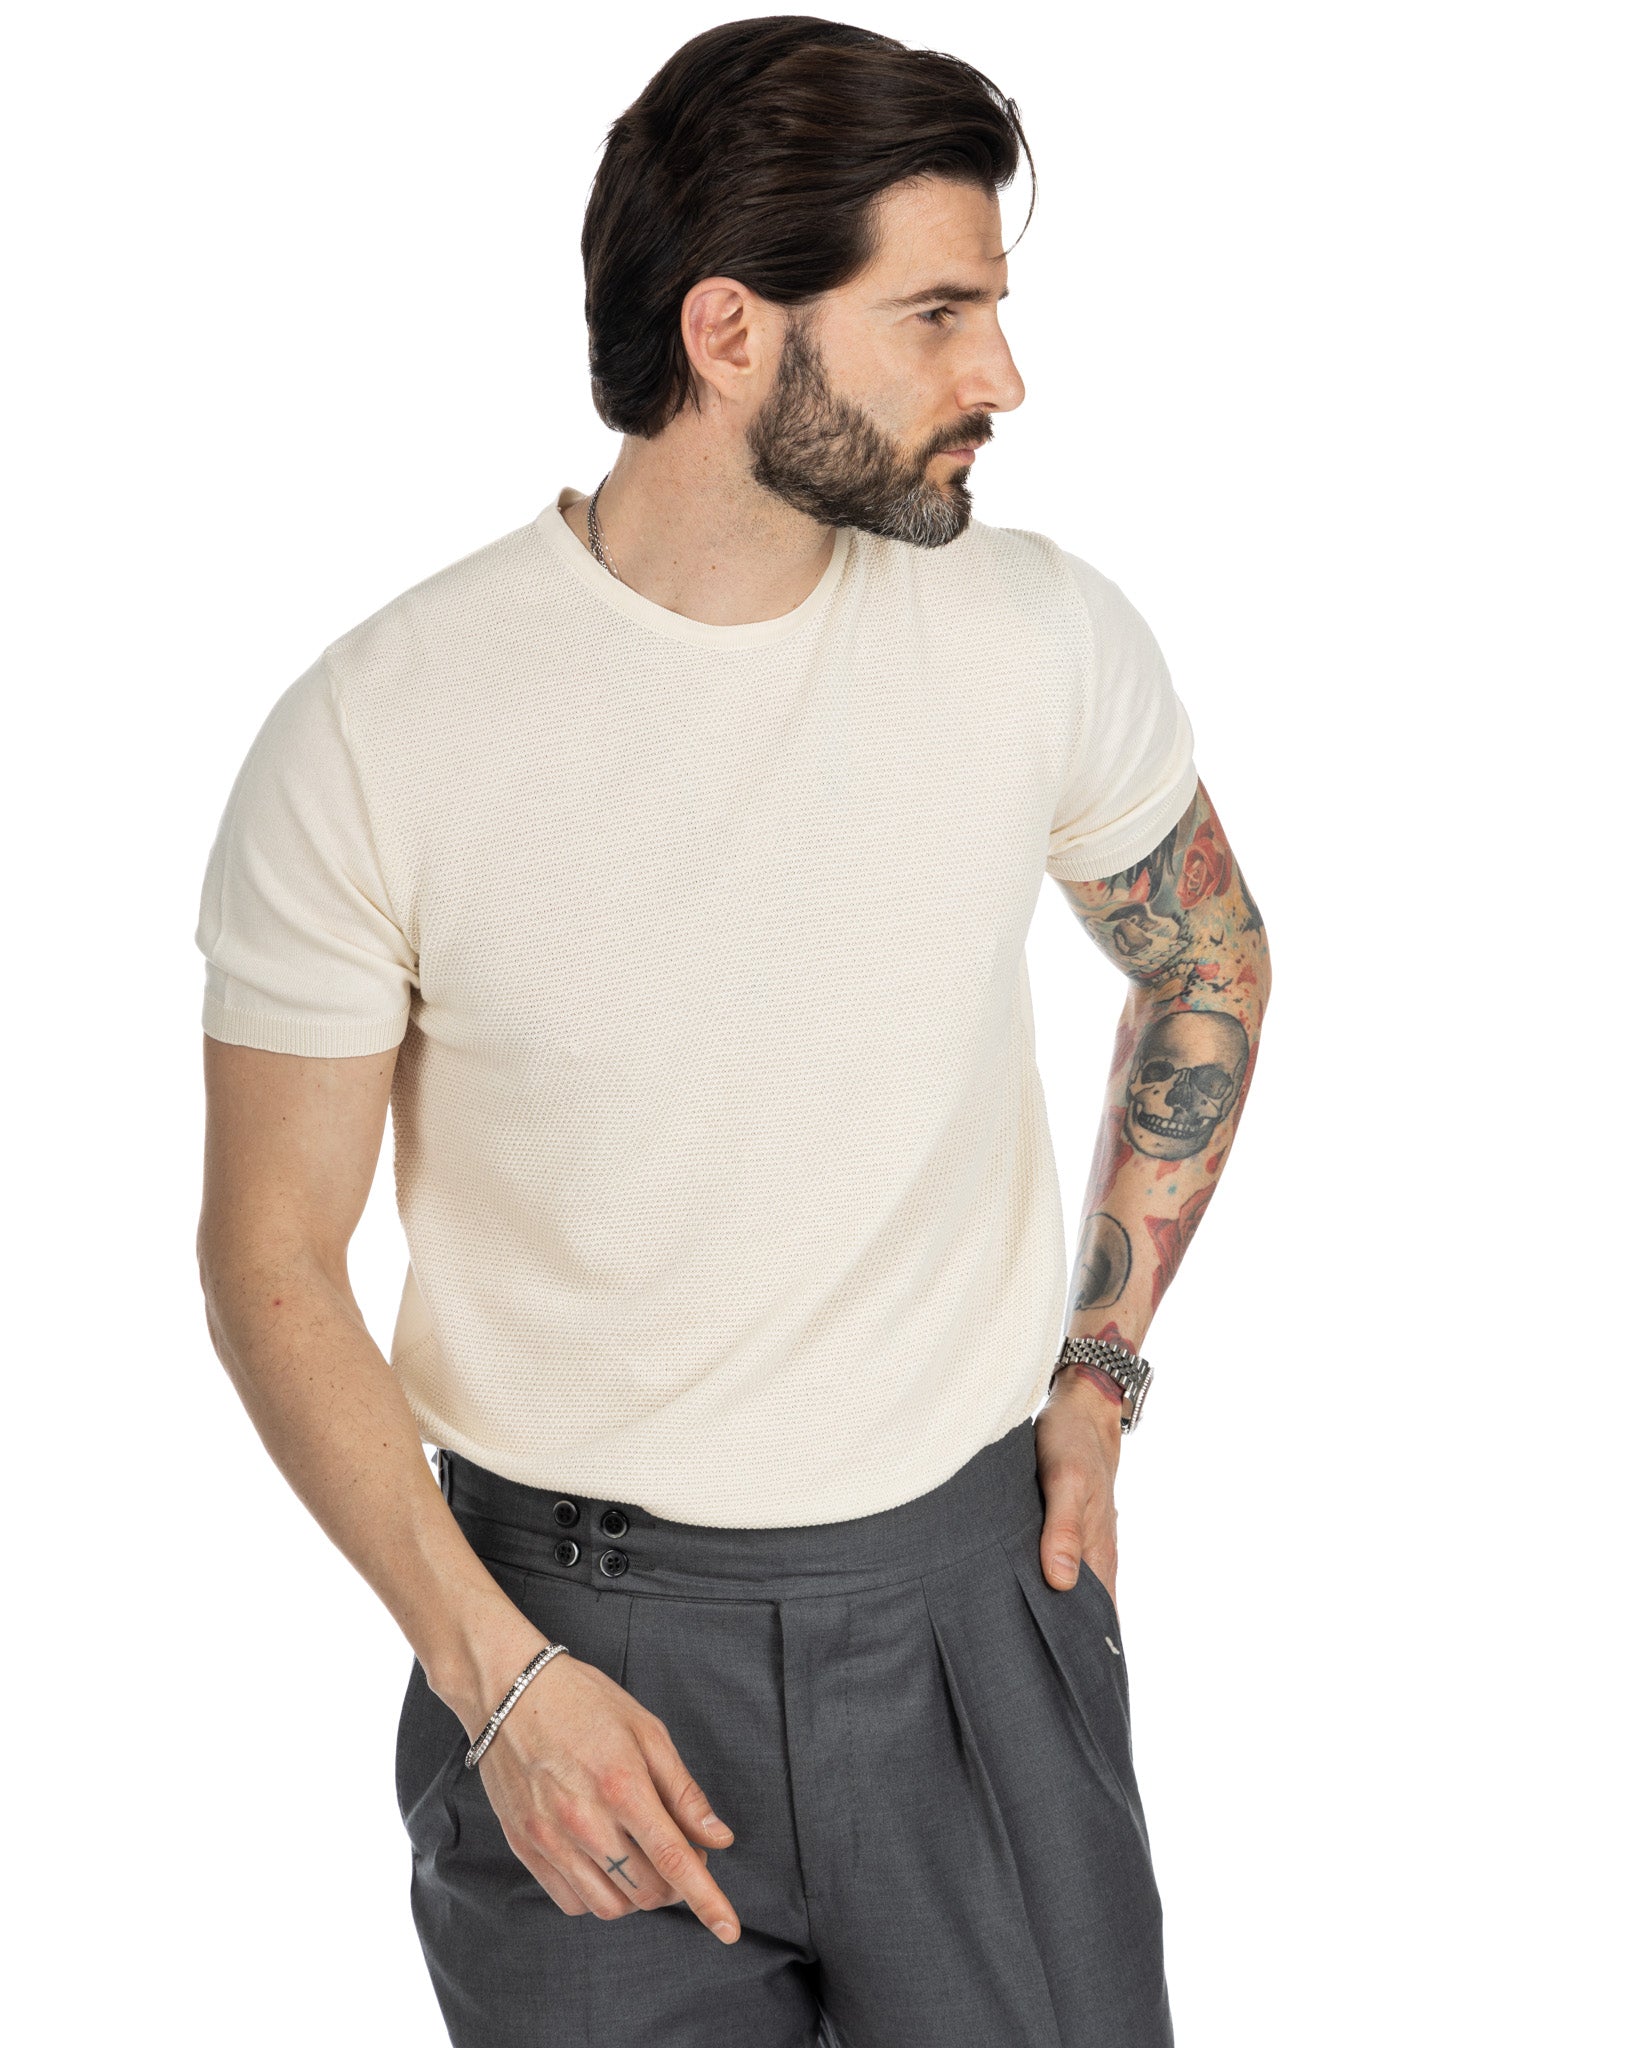 Lorenzo - t-shirt panna in maglia jacquard